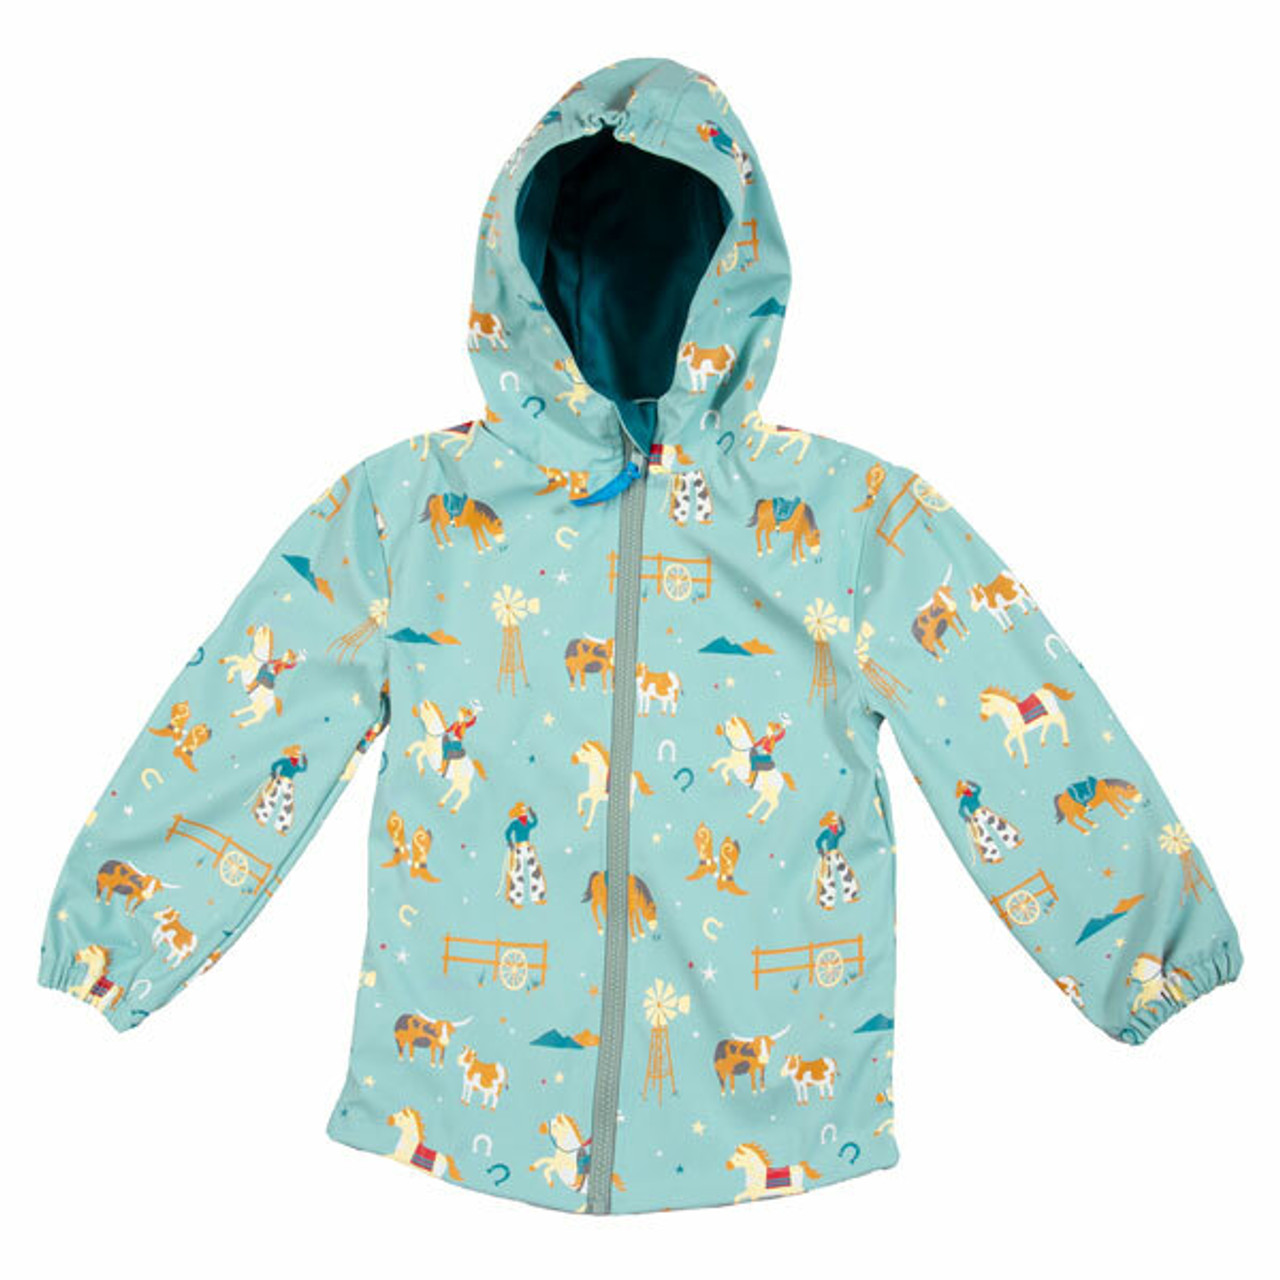 Rain Jacket for Toddler Boy